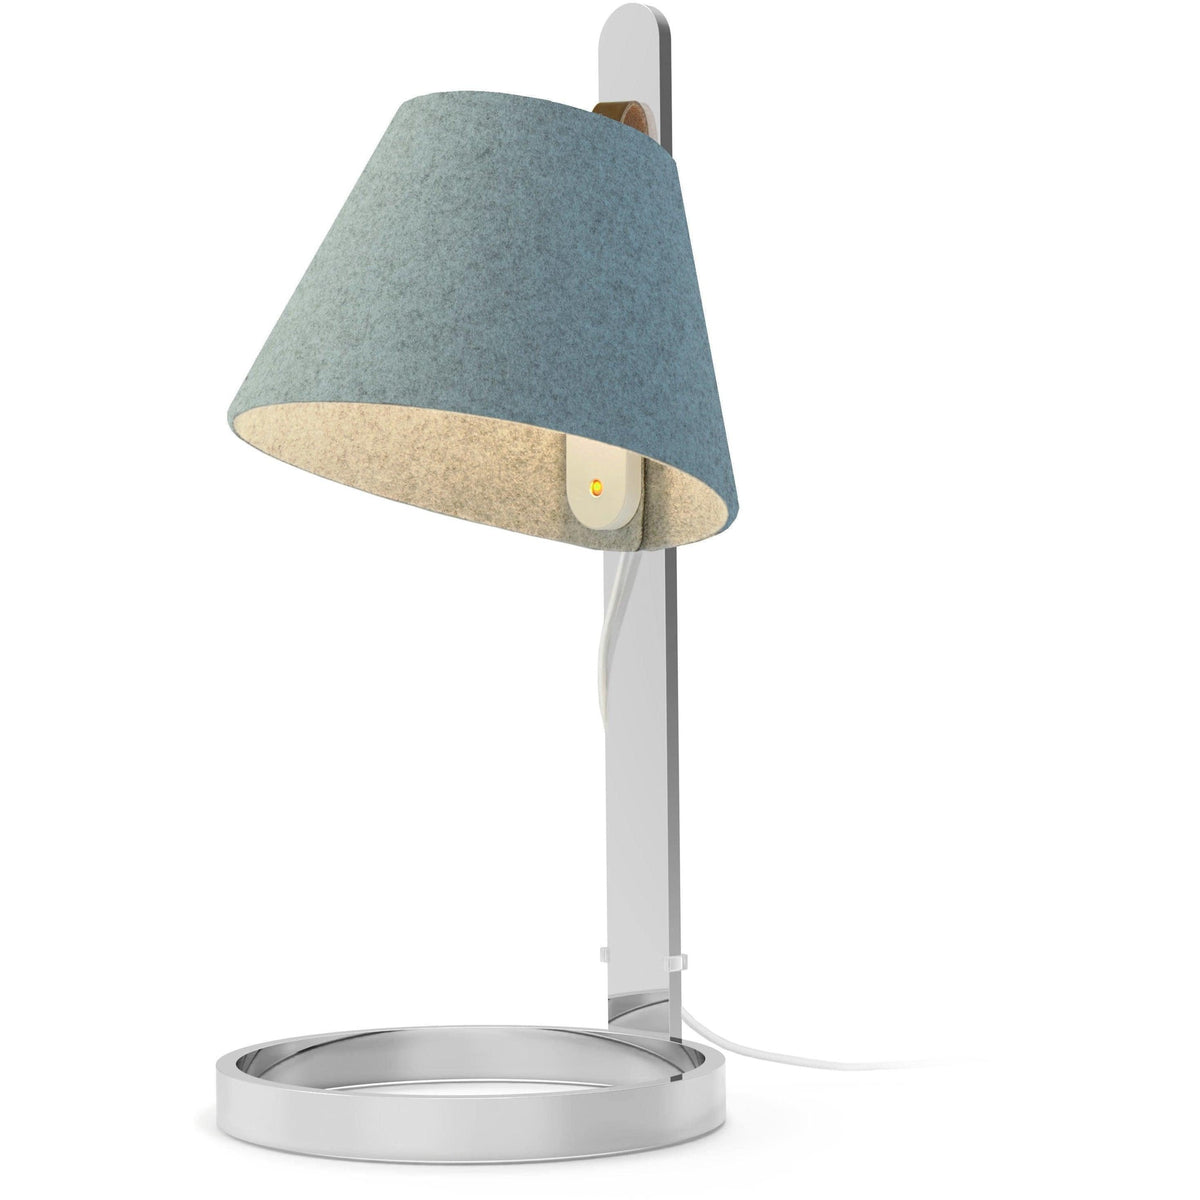 Pablo Designs - Lana Table Lamp - LANA MINI TBL ARCT/GRY CRM | Montreal Lighting & Hardware